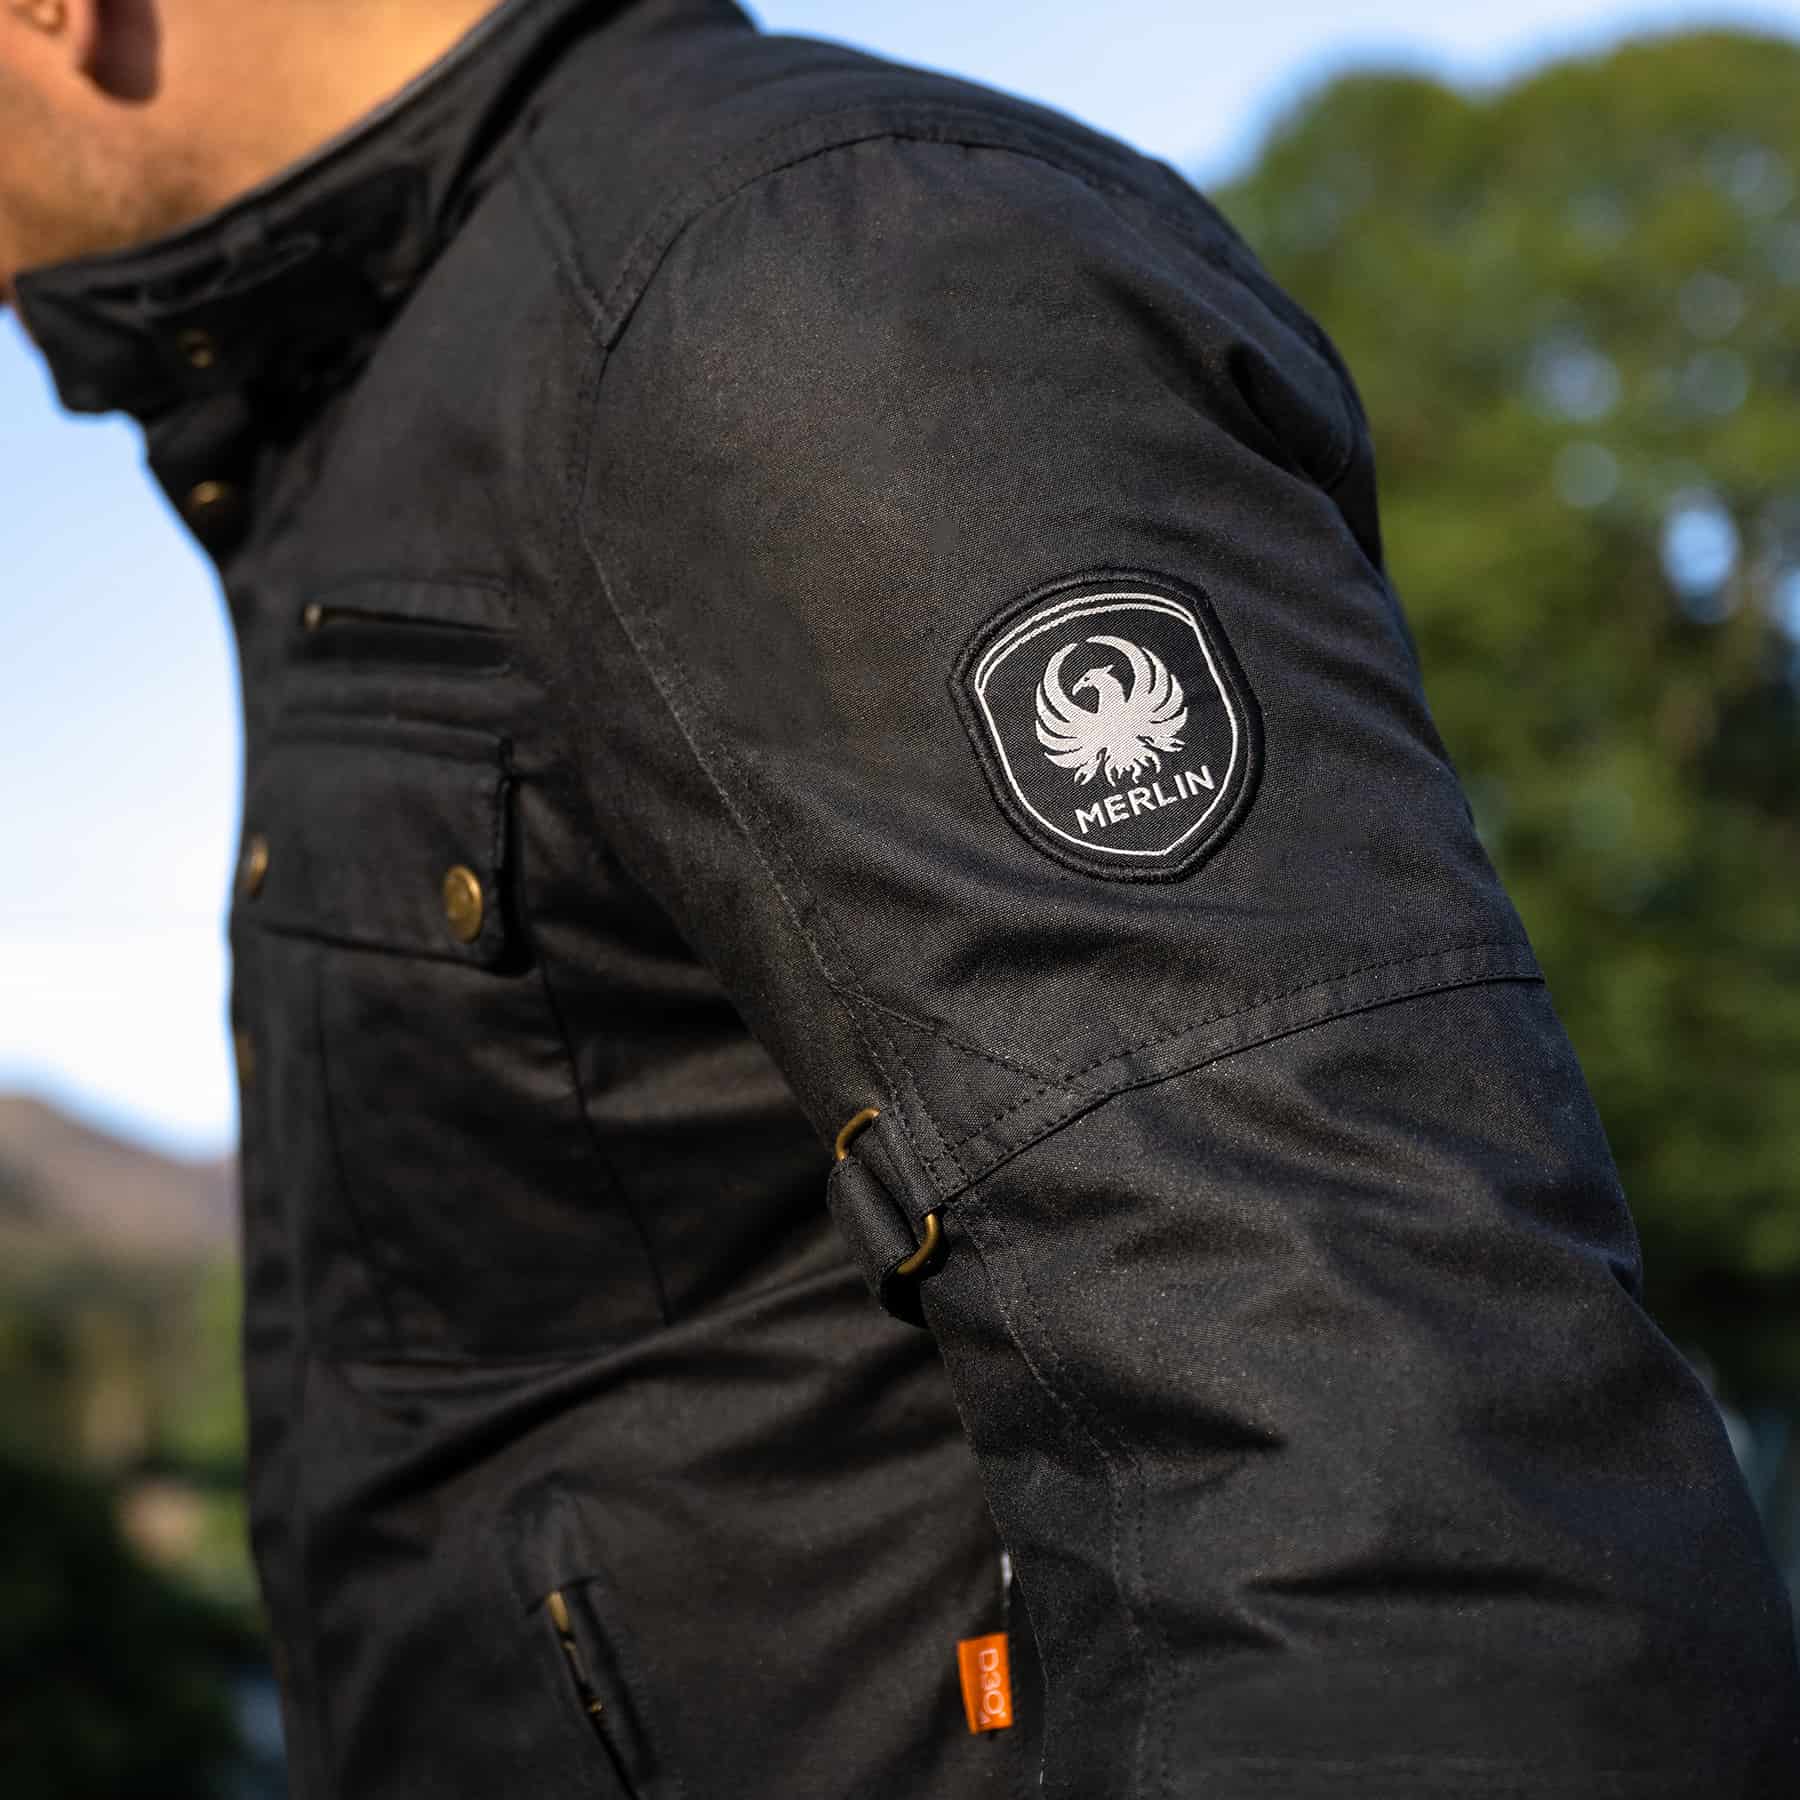 Merlin Barton 2 waxed cotton motorcycle jacket in black